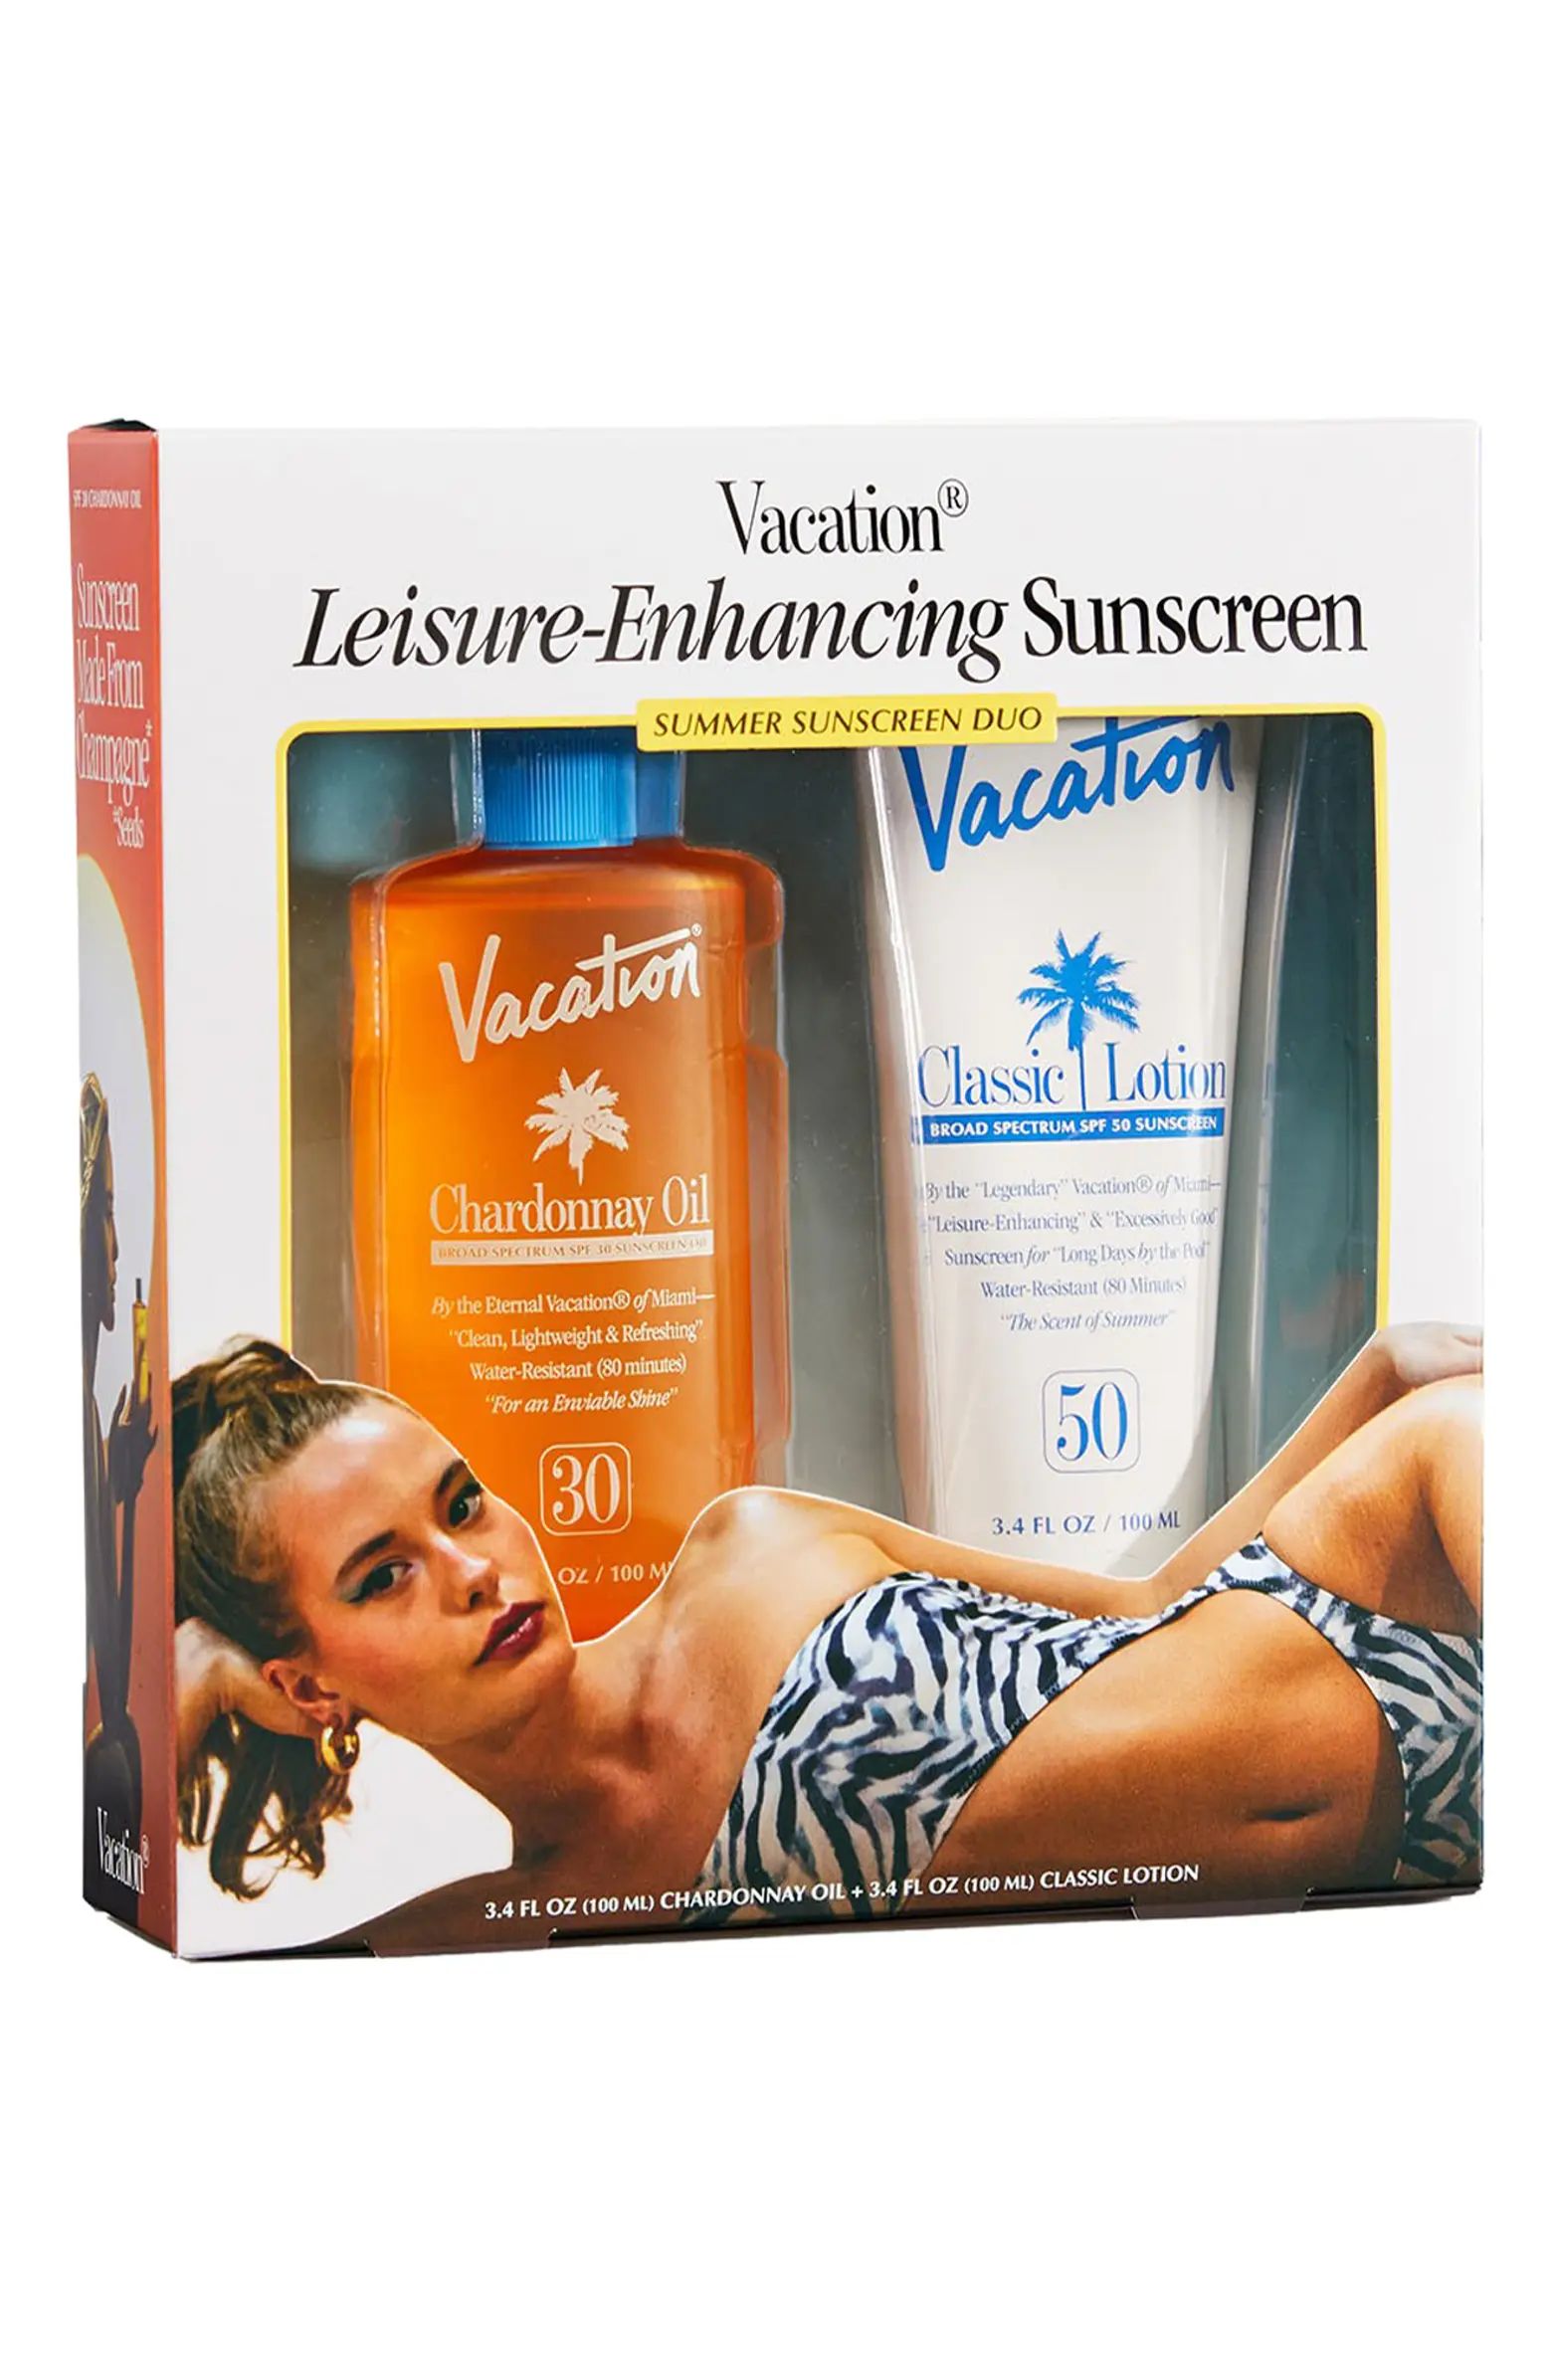 Leisure-Enhancing Sunscreen Summer Sunscreen Duo $41 Value | Nordstrom